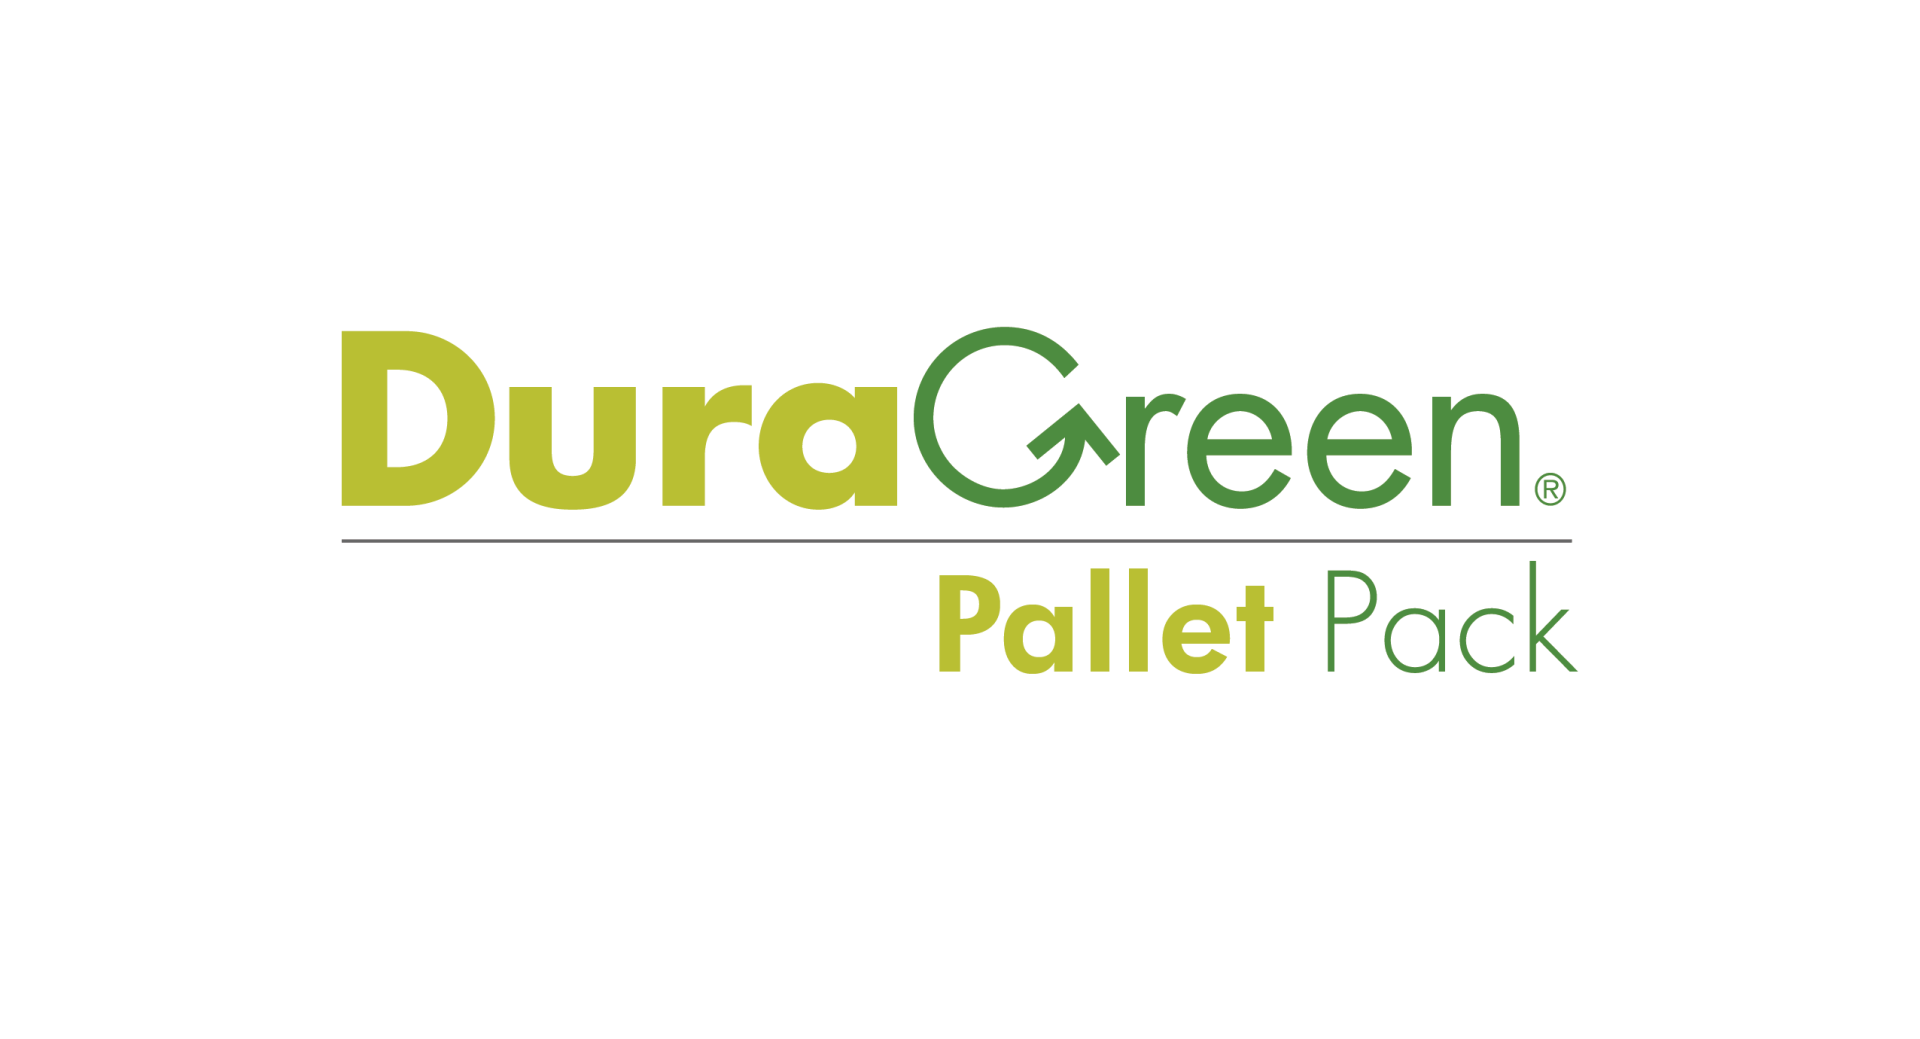 DuraGreen pallet pack logo